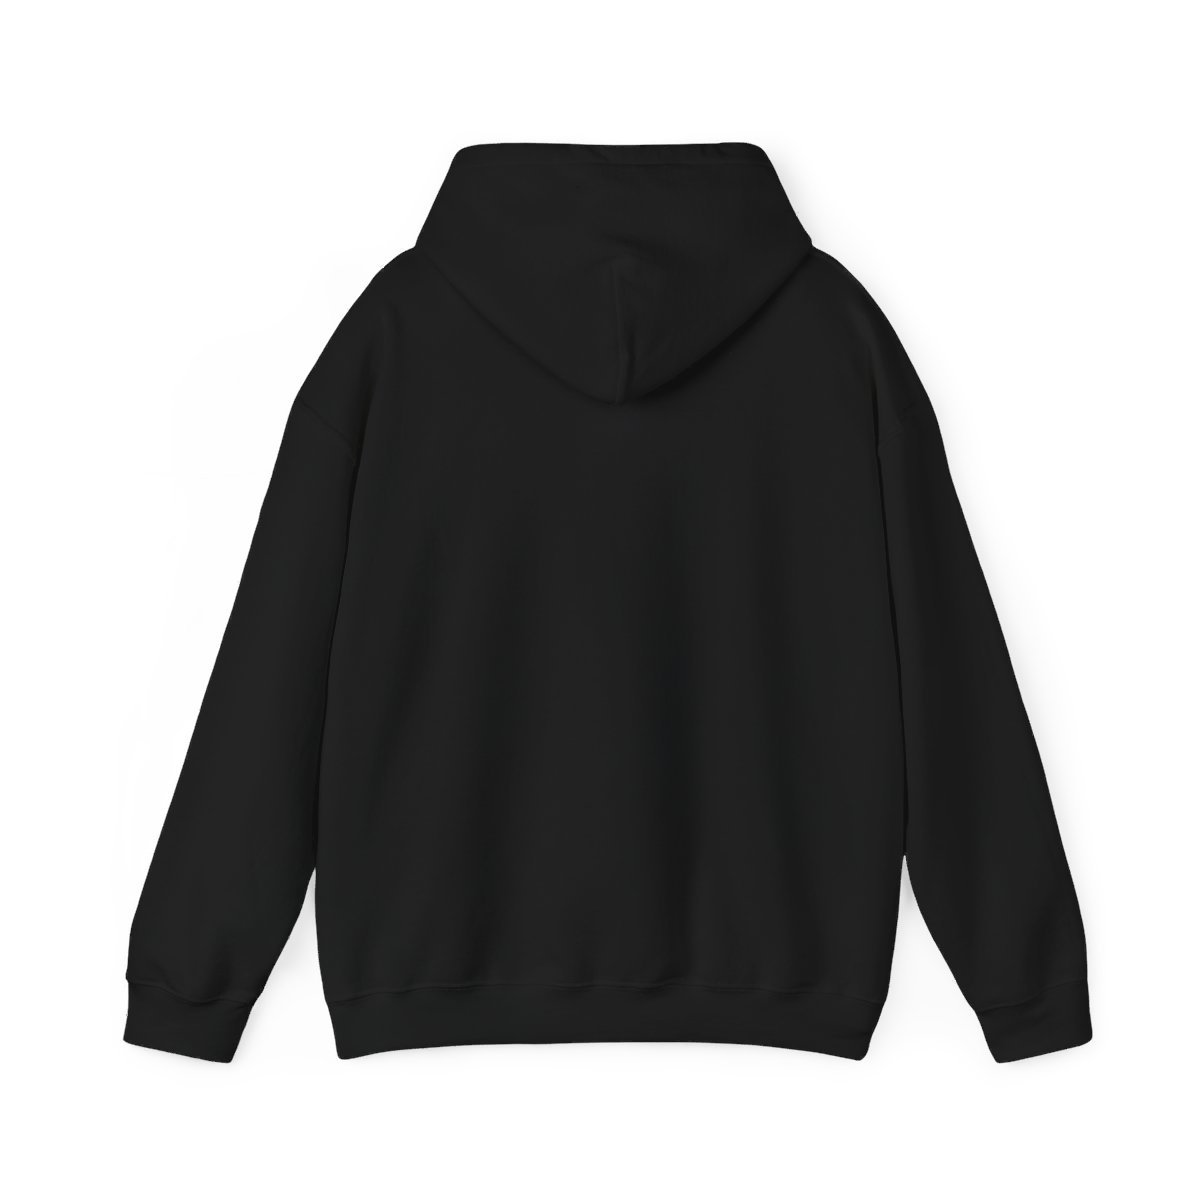 The Lifesavors – Dream Life Pullover Hooded Sweatshirt